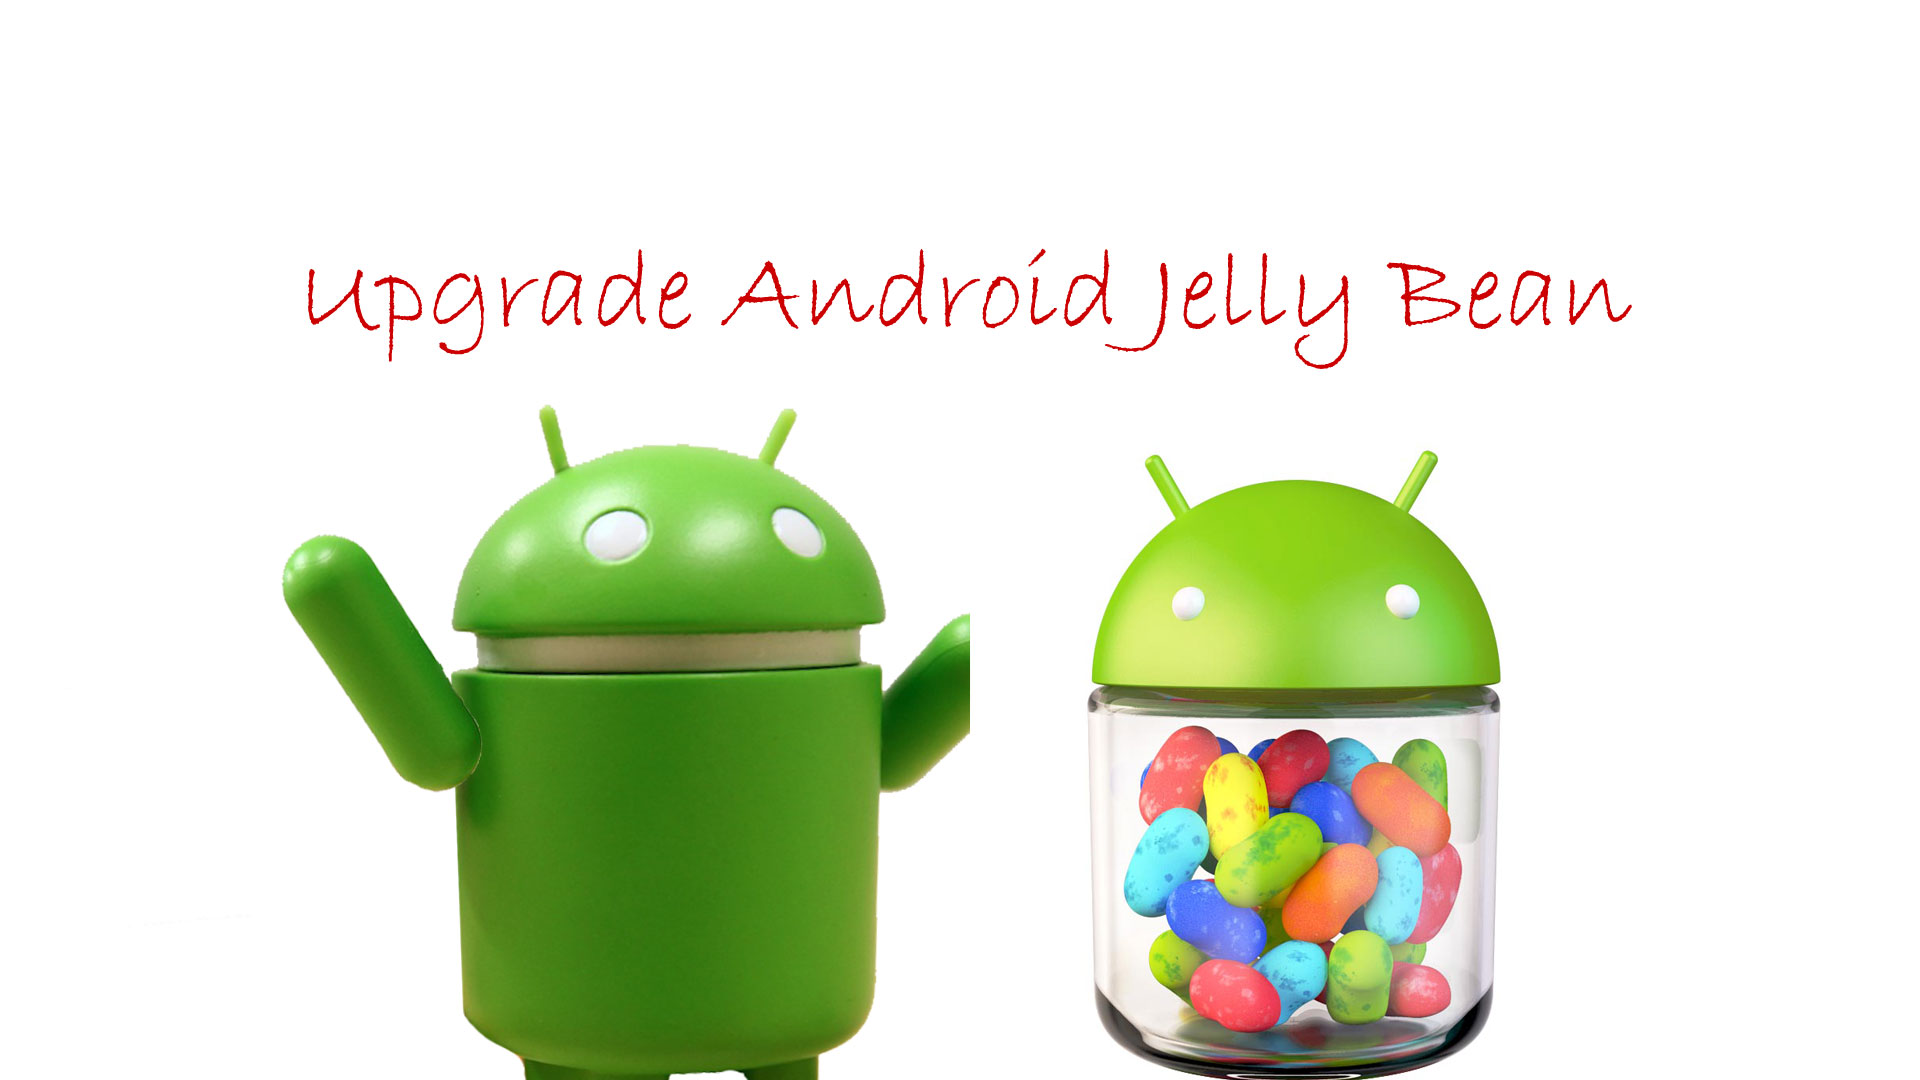 Android Jelly Bean Imagebank Biz